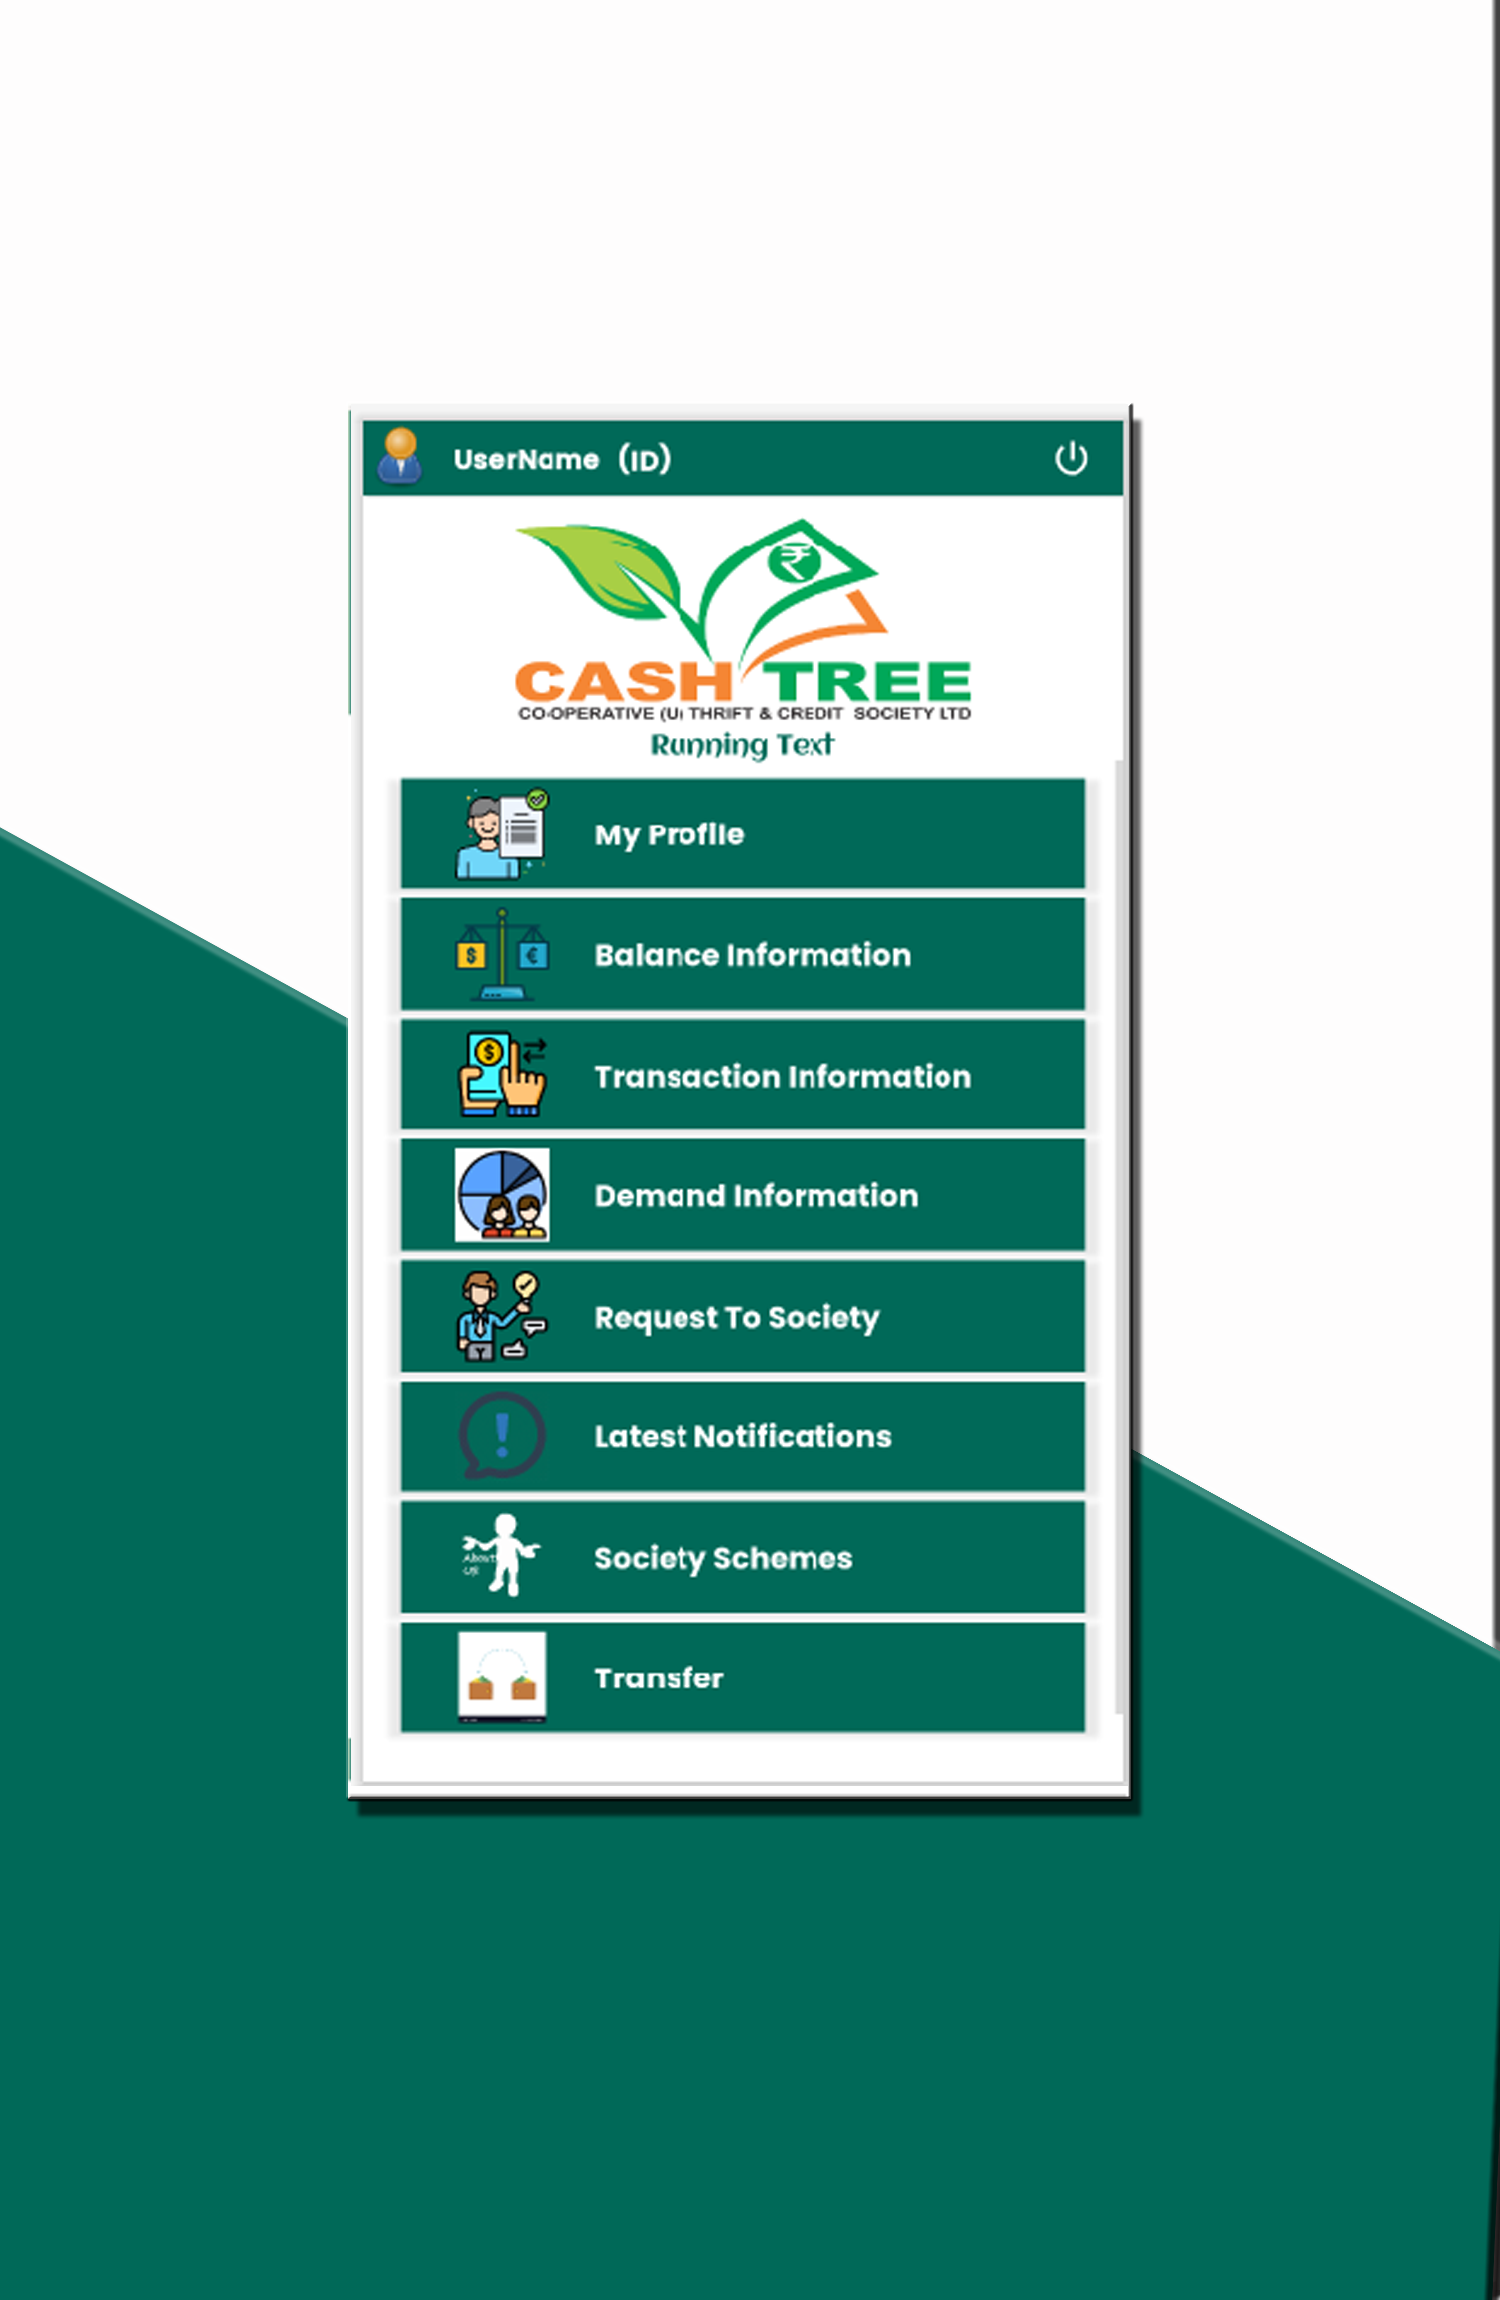 Cash Tree Co-Operative (U) Thrift & Credit Society Ltd.